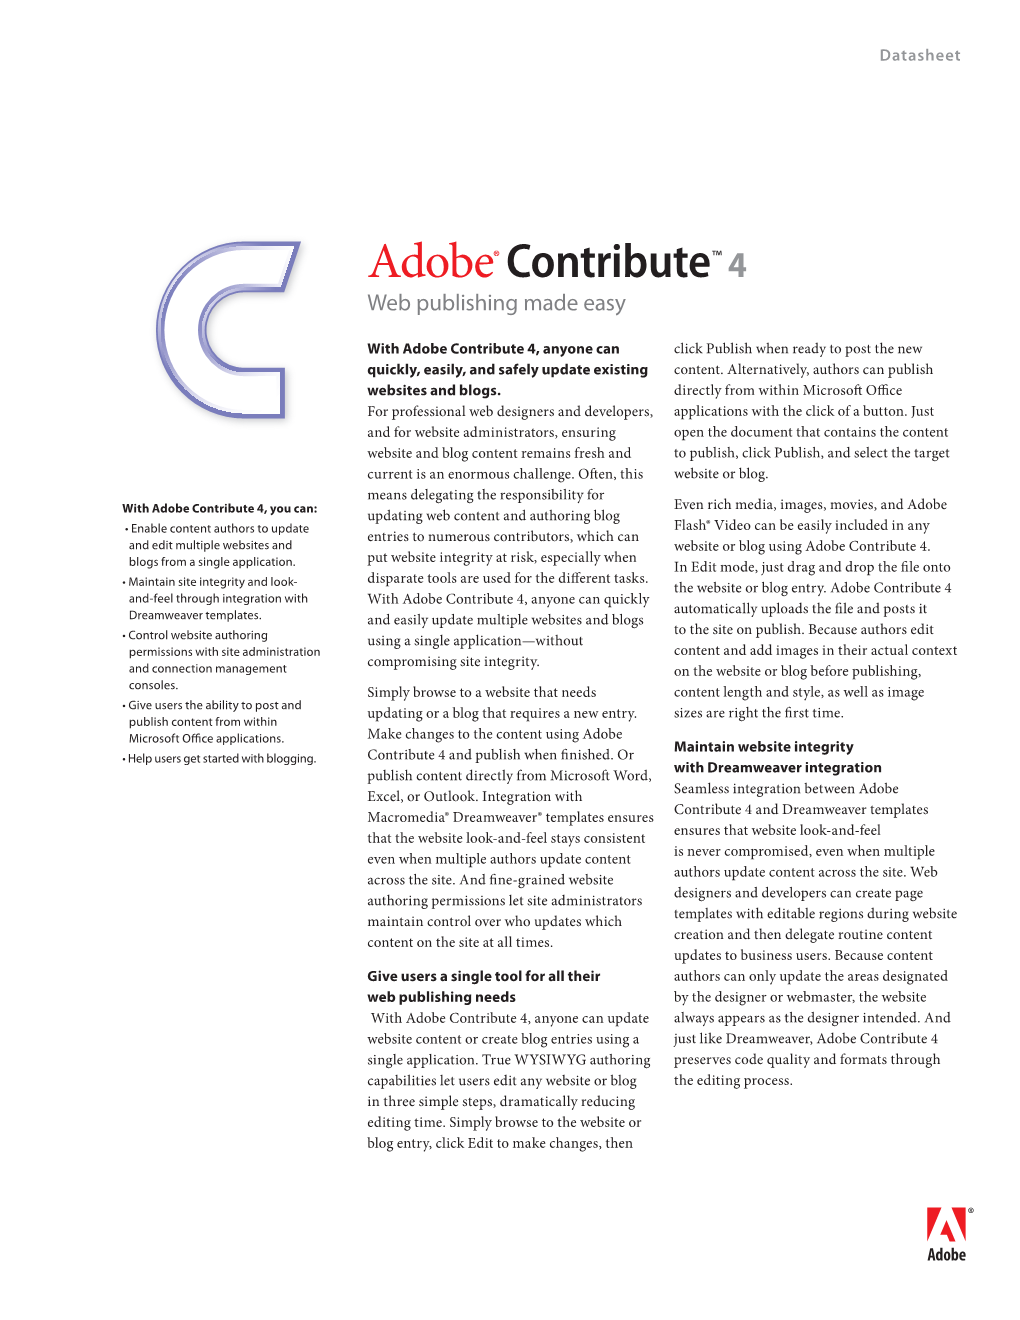 Adobe® Contribute™ 4 Web Publishing Made Easy